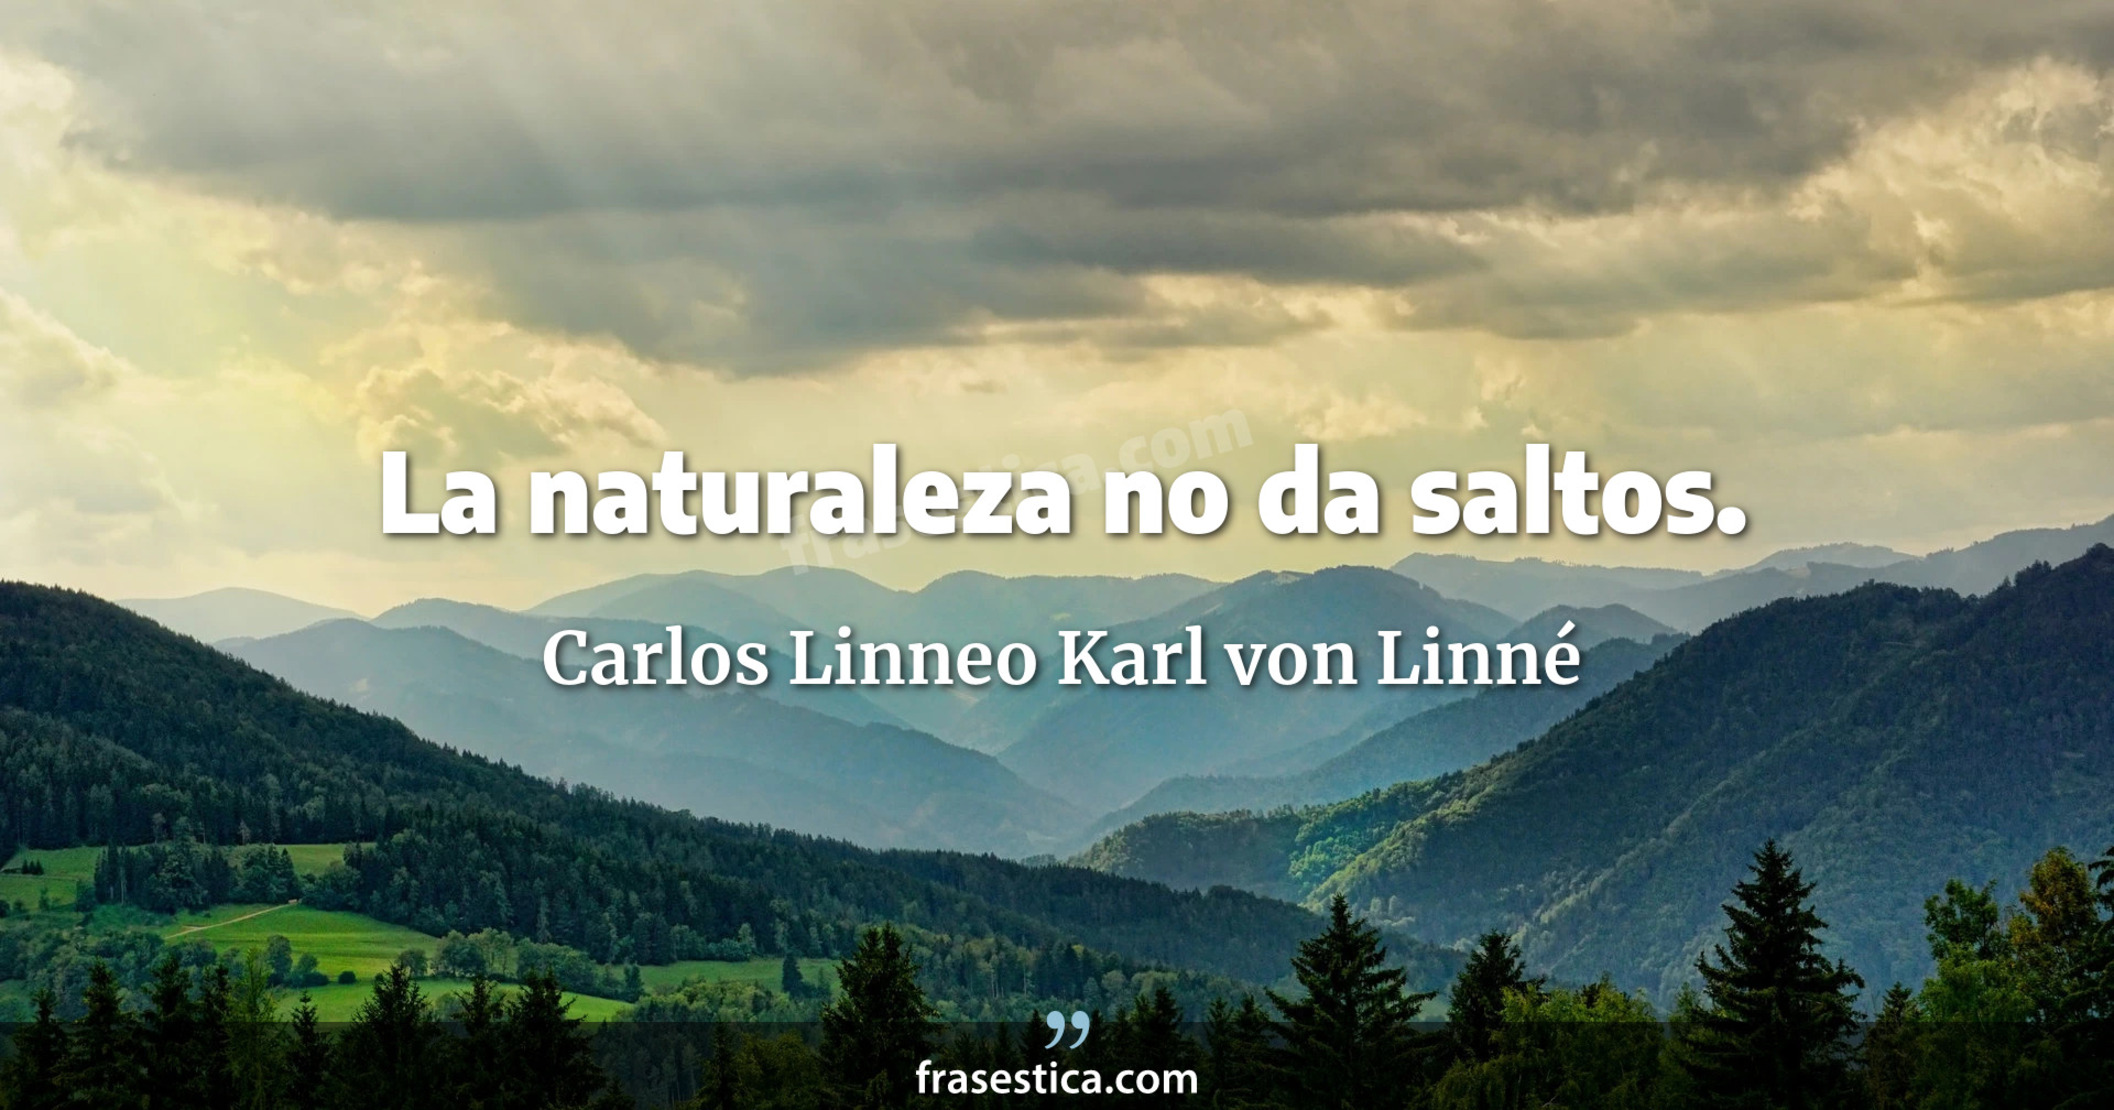 La naturaleza no da saltos. - Carlos Linneo Karl von Linné